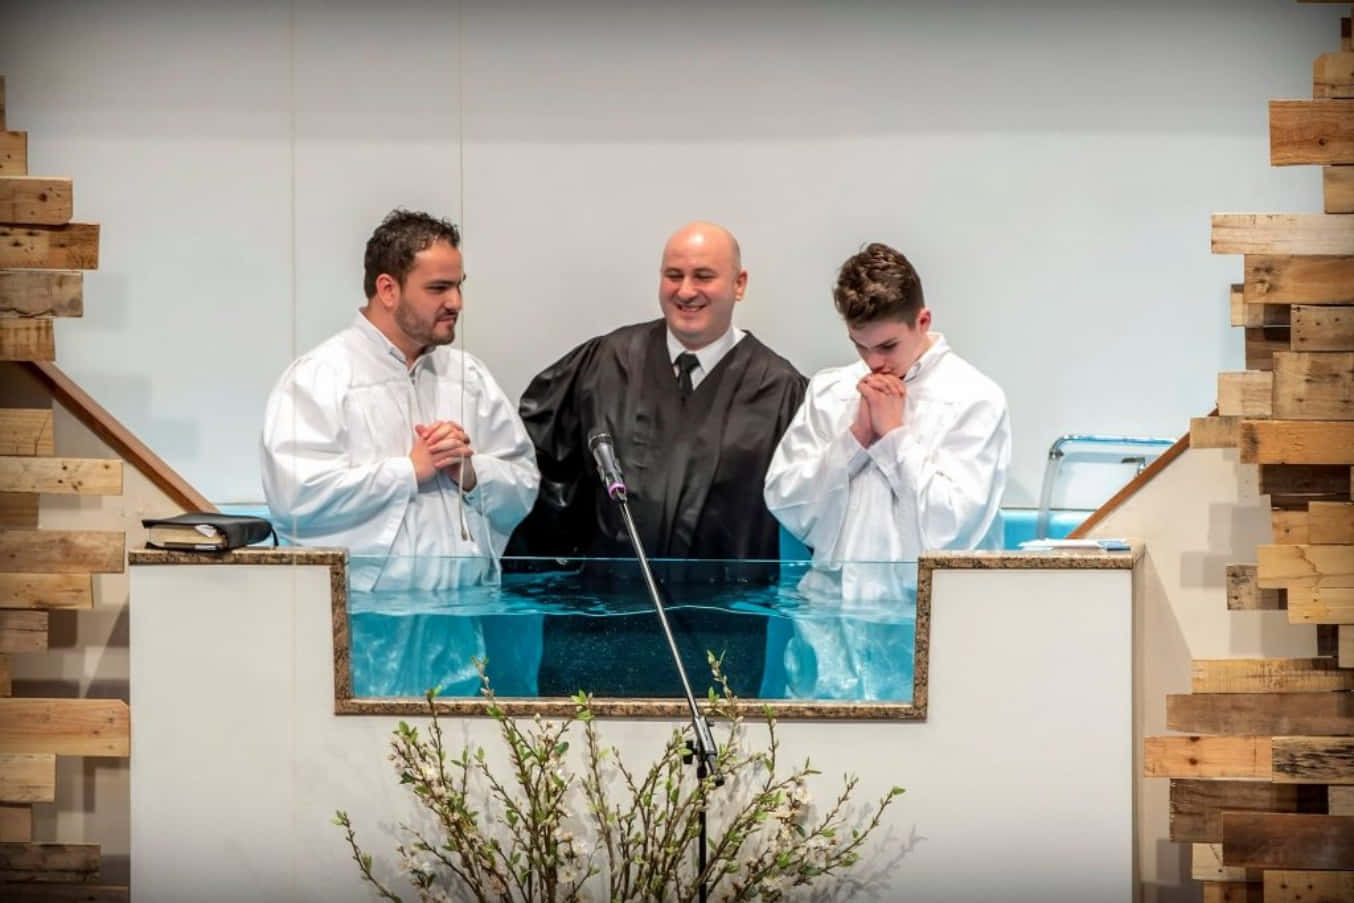 Celebrating the Sacrament of Baptism